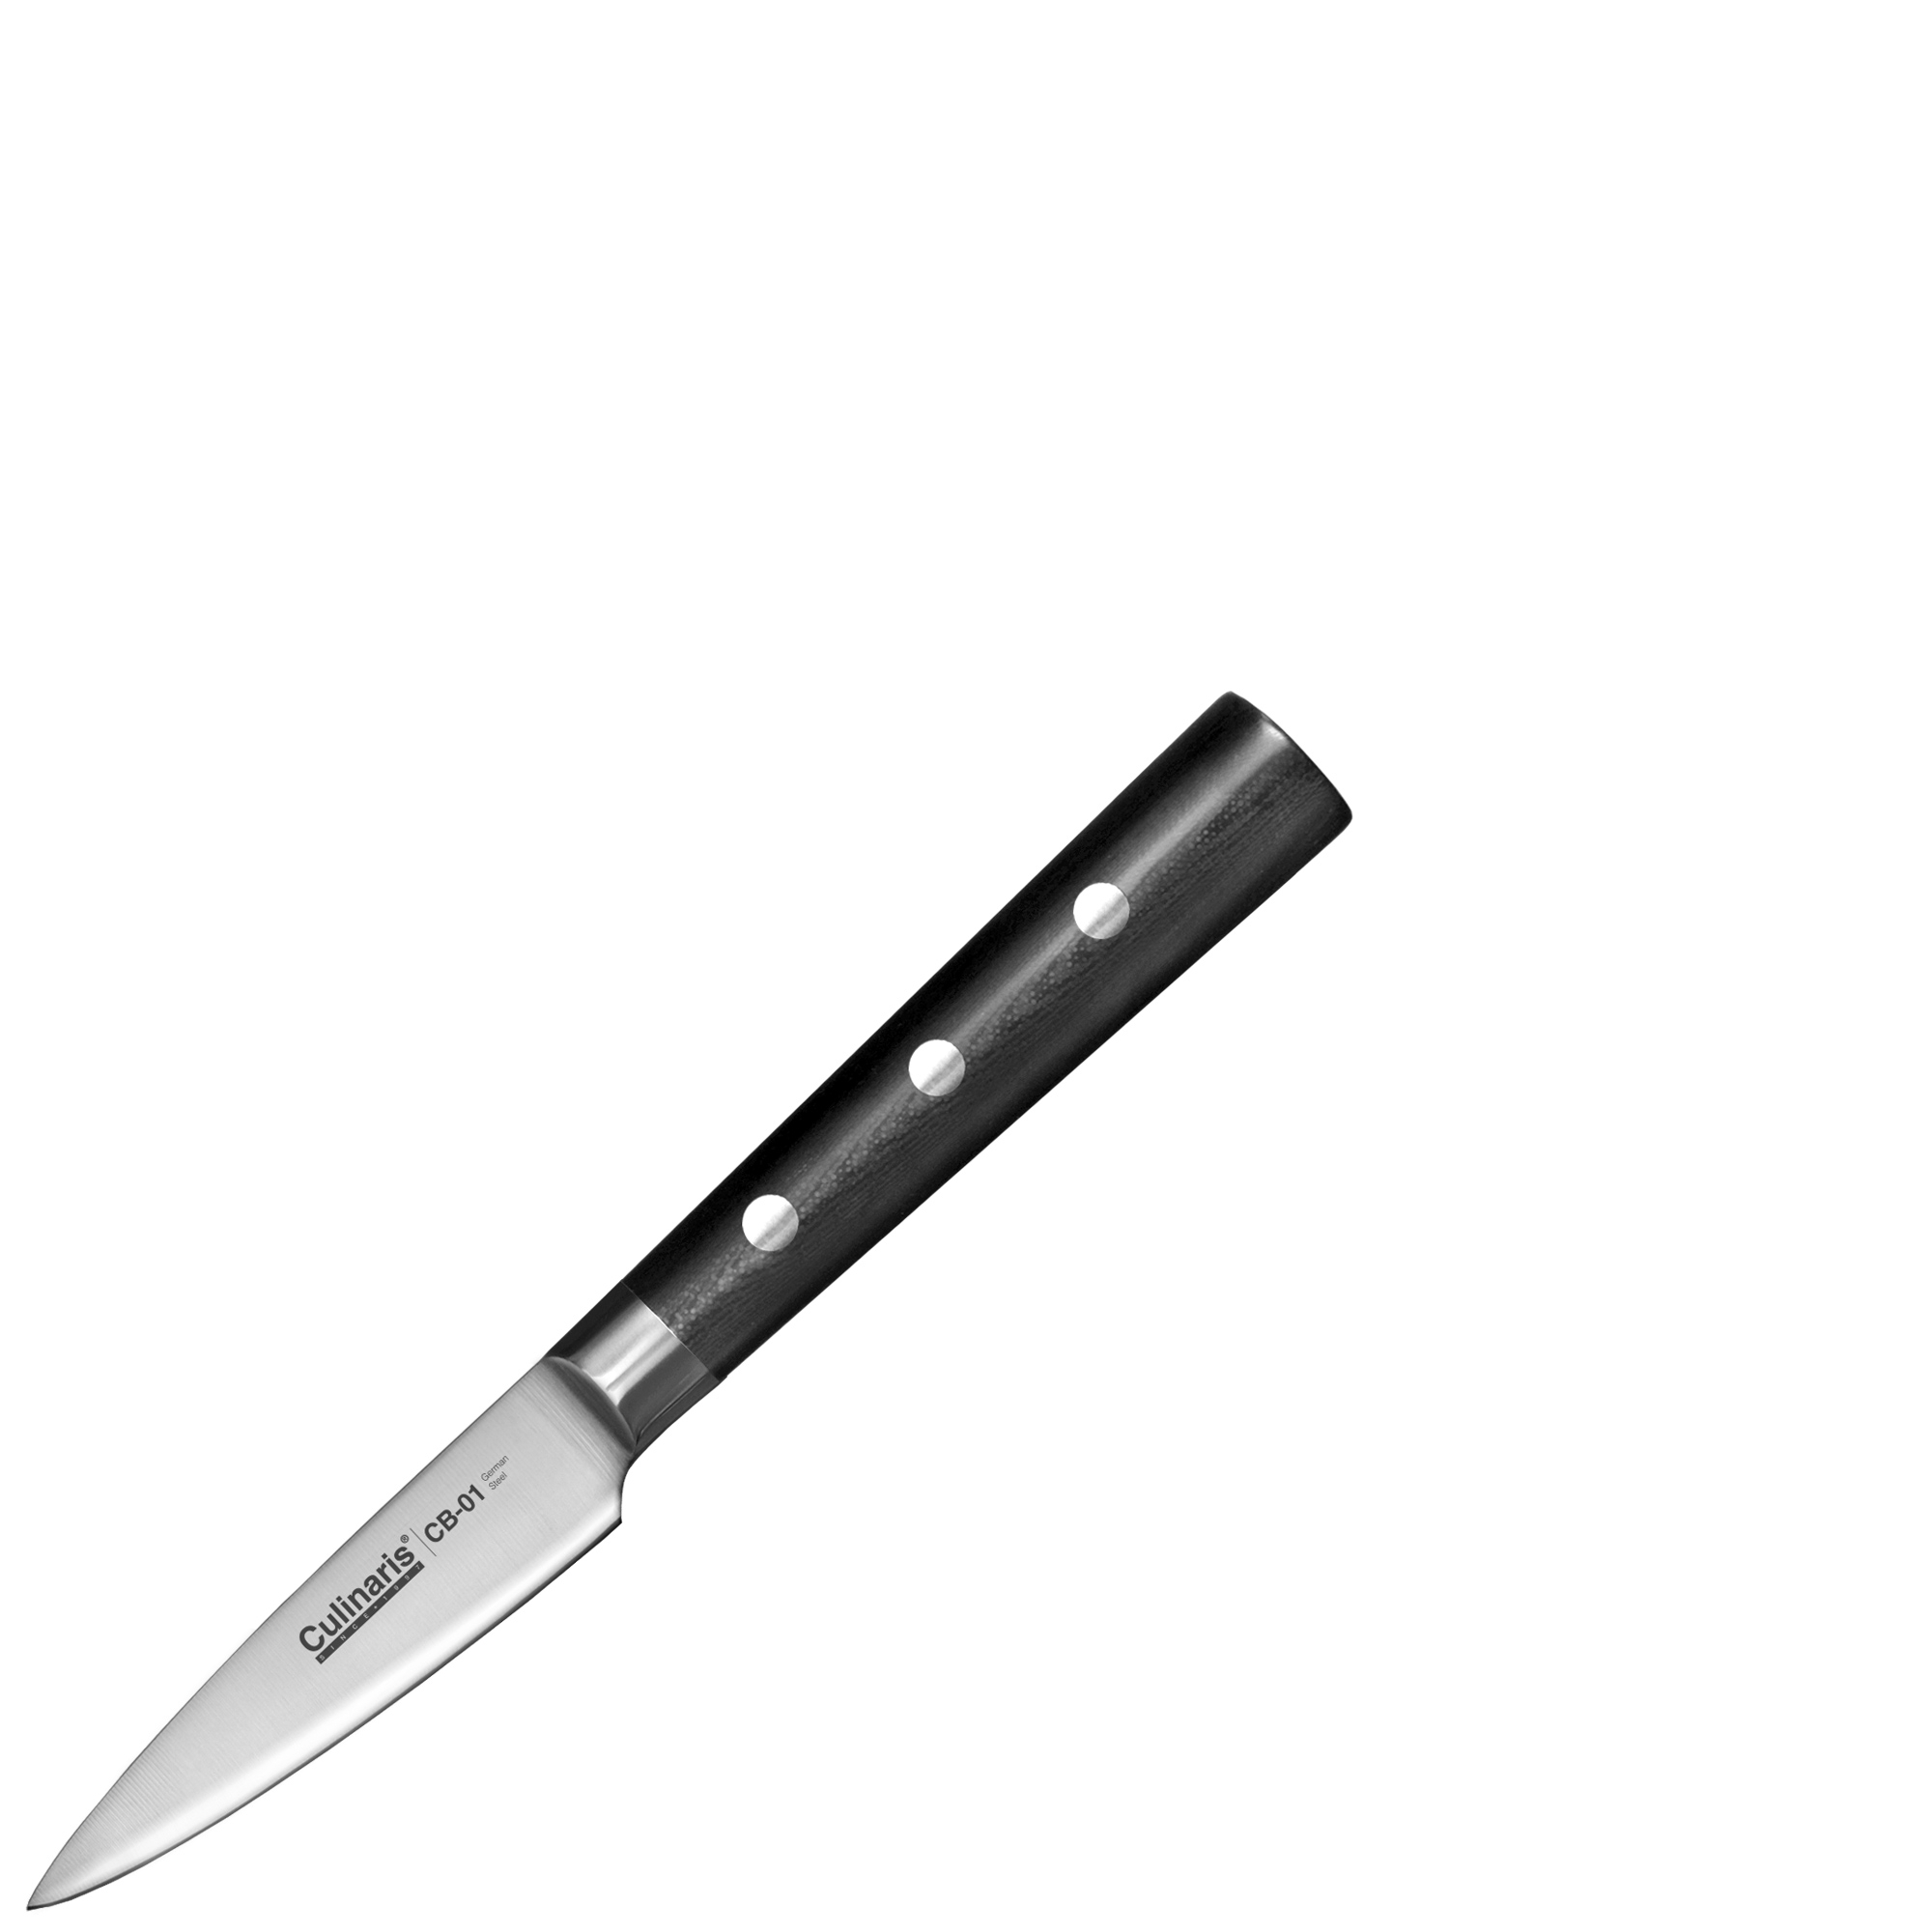 Culinaris - Paring Knife 10 cm